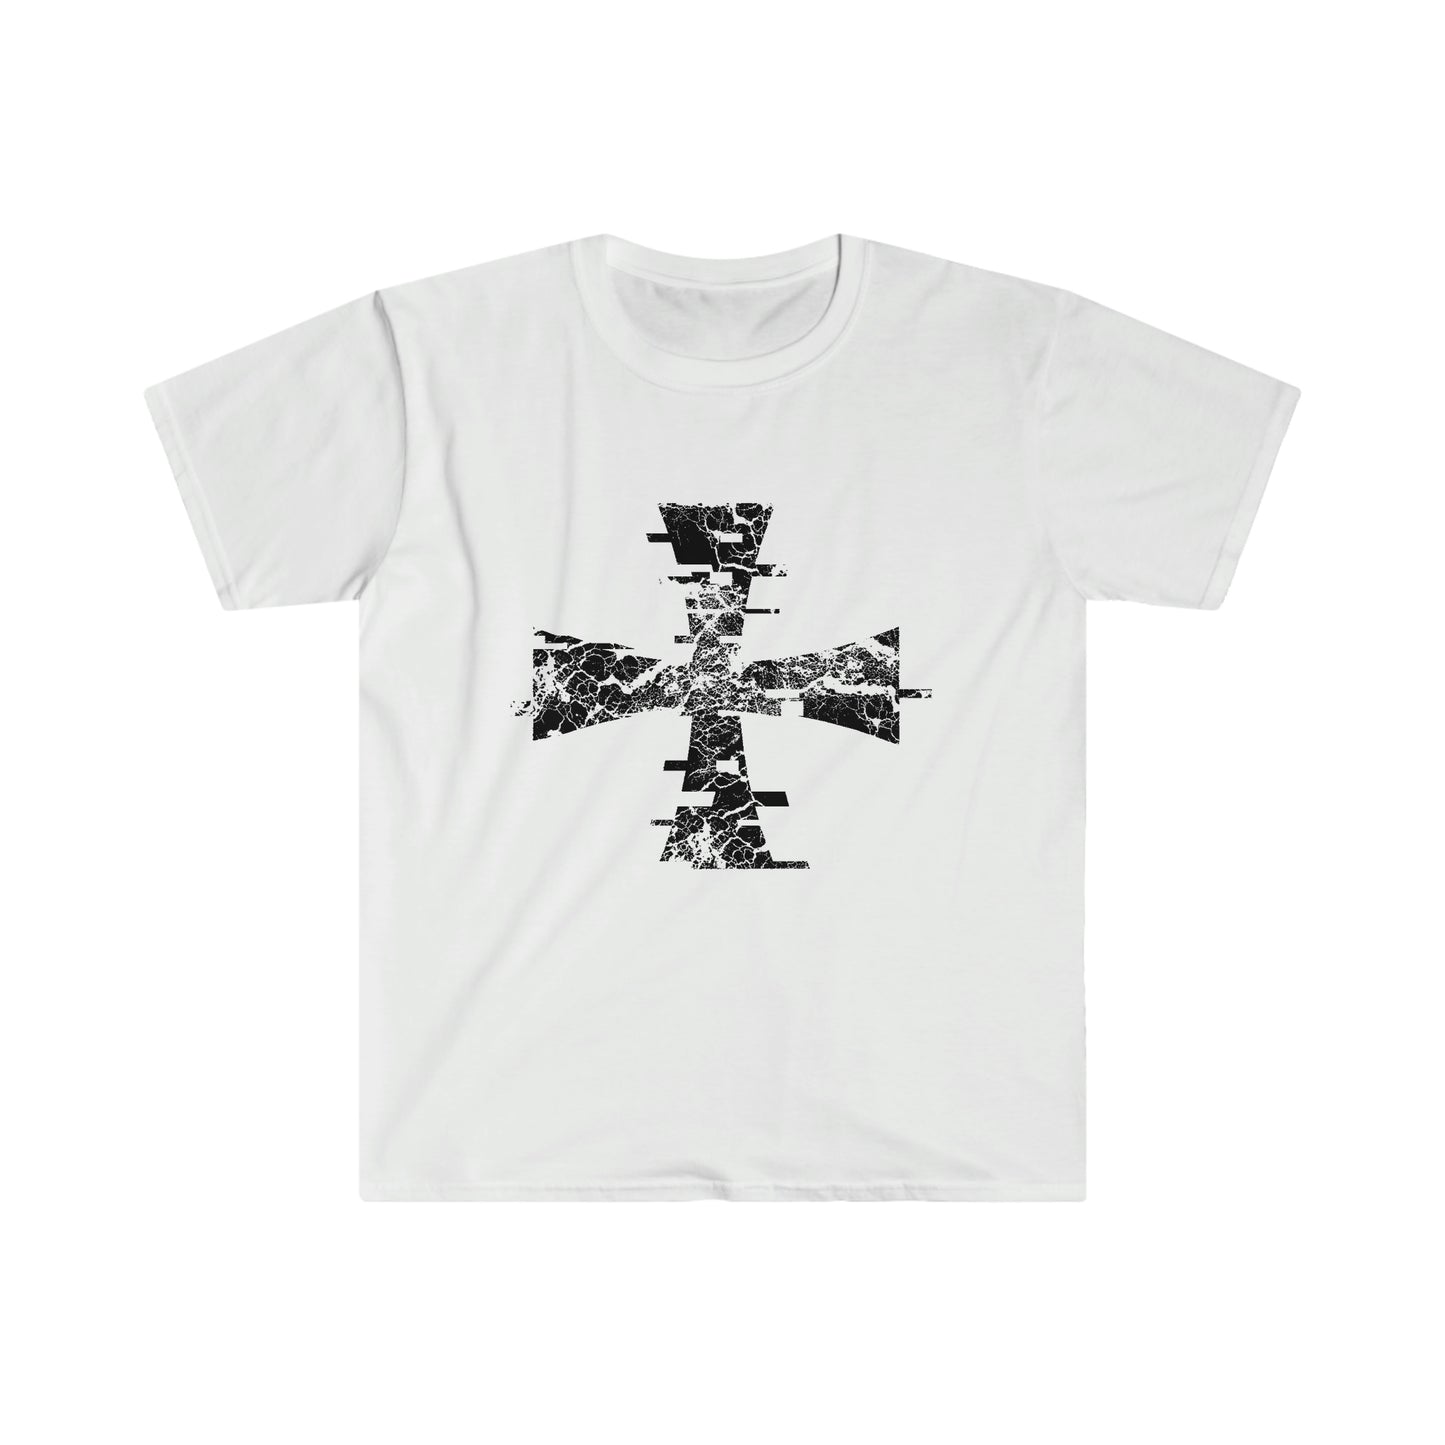 Black Distressed Crusader Logo on a White T-Shirt, by Sanctus Servo